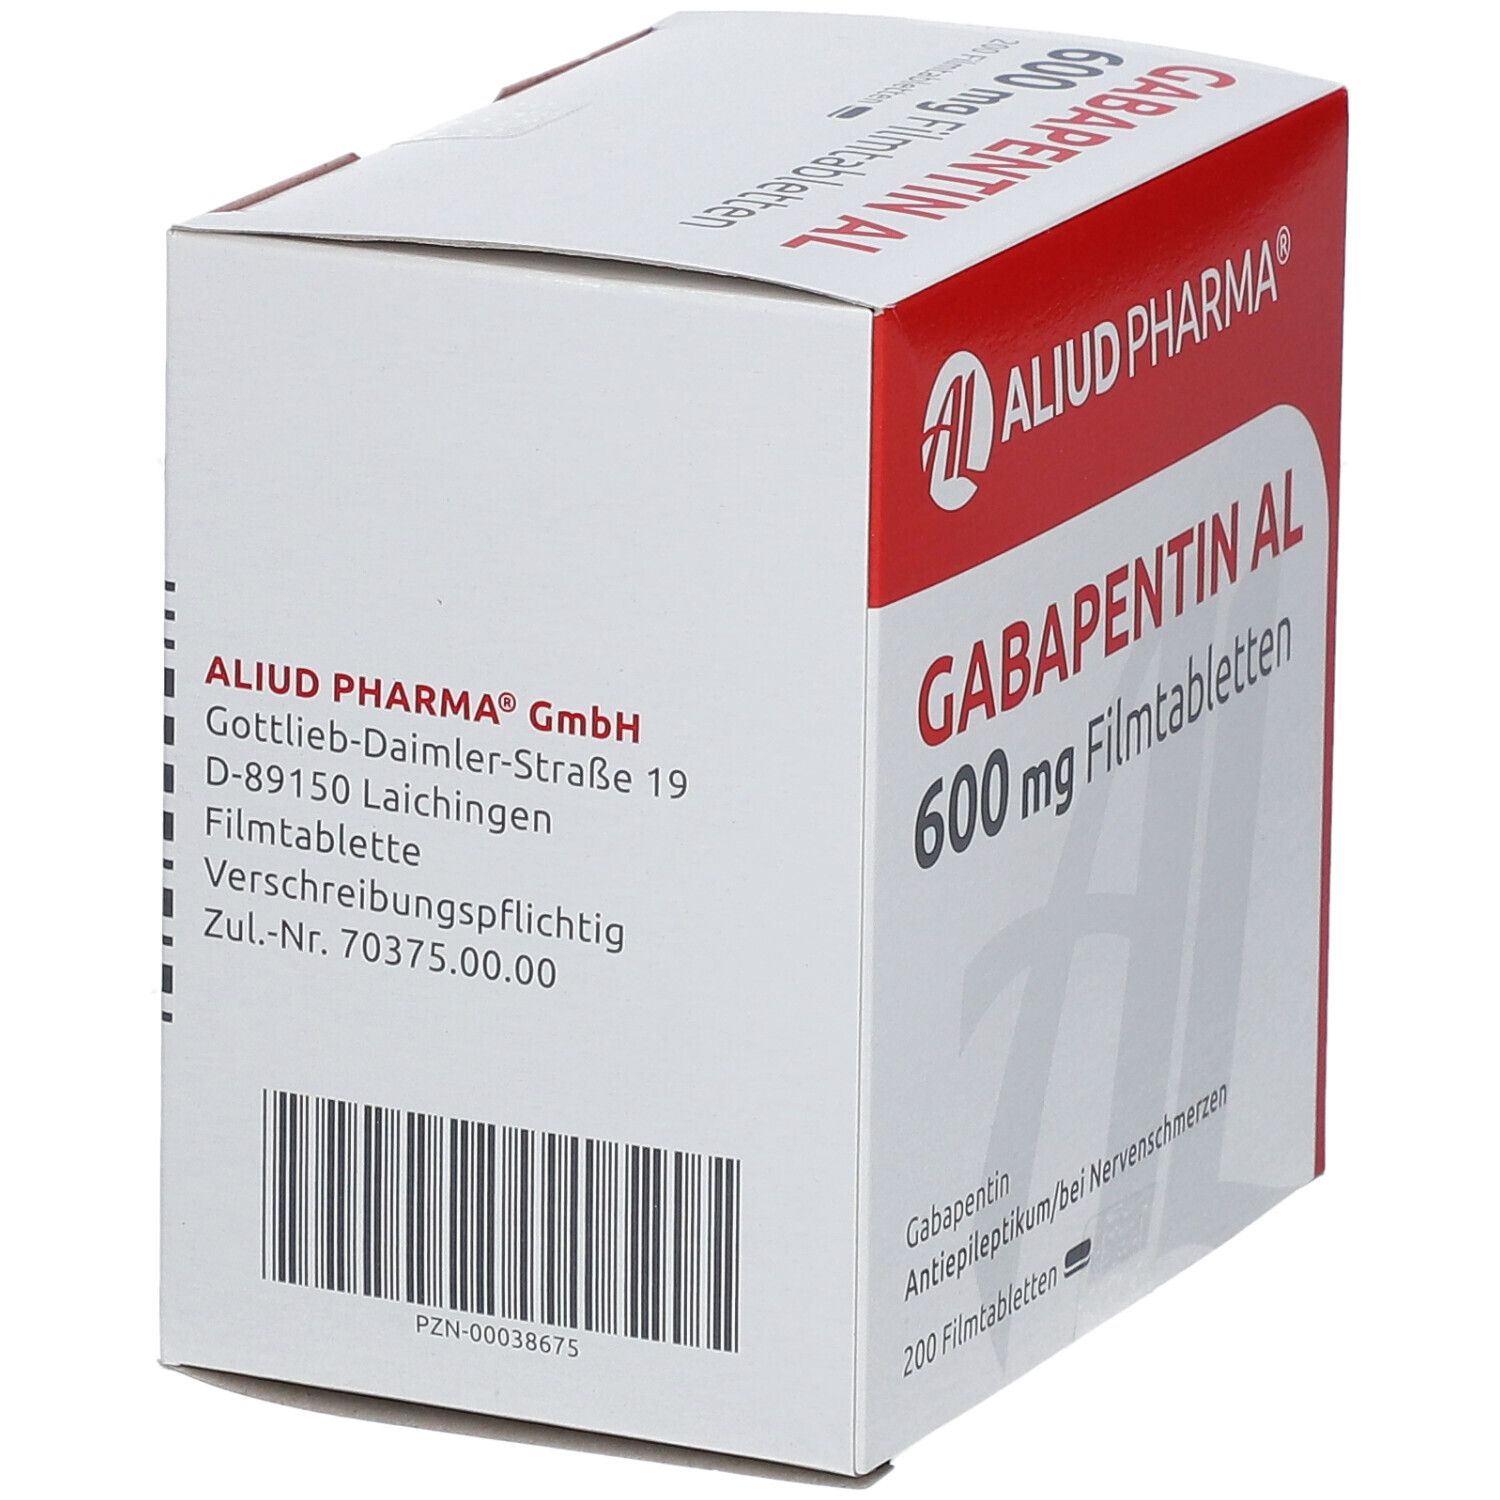 Gabapentin AL 600 mg